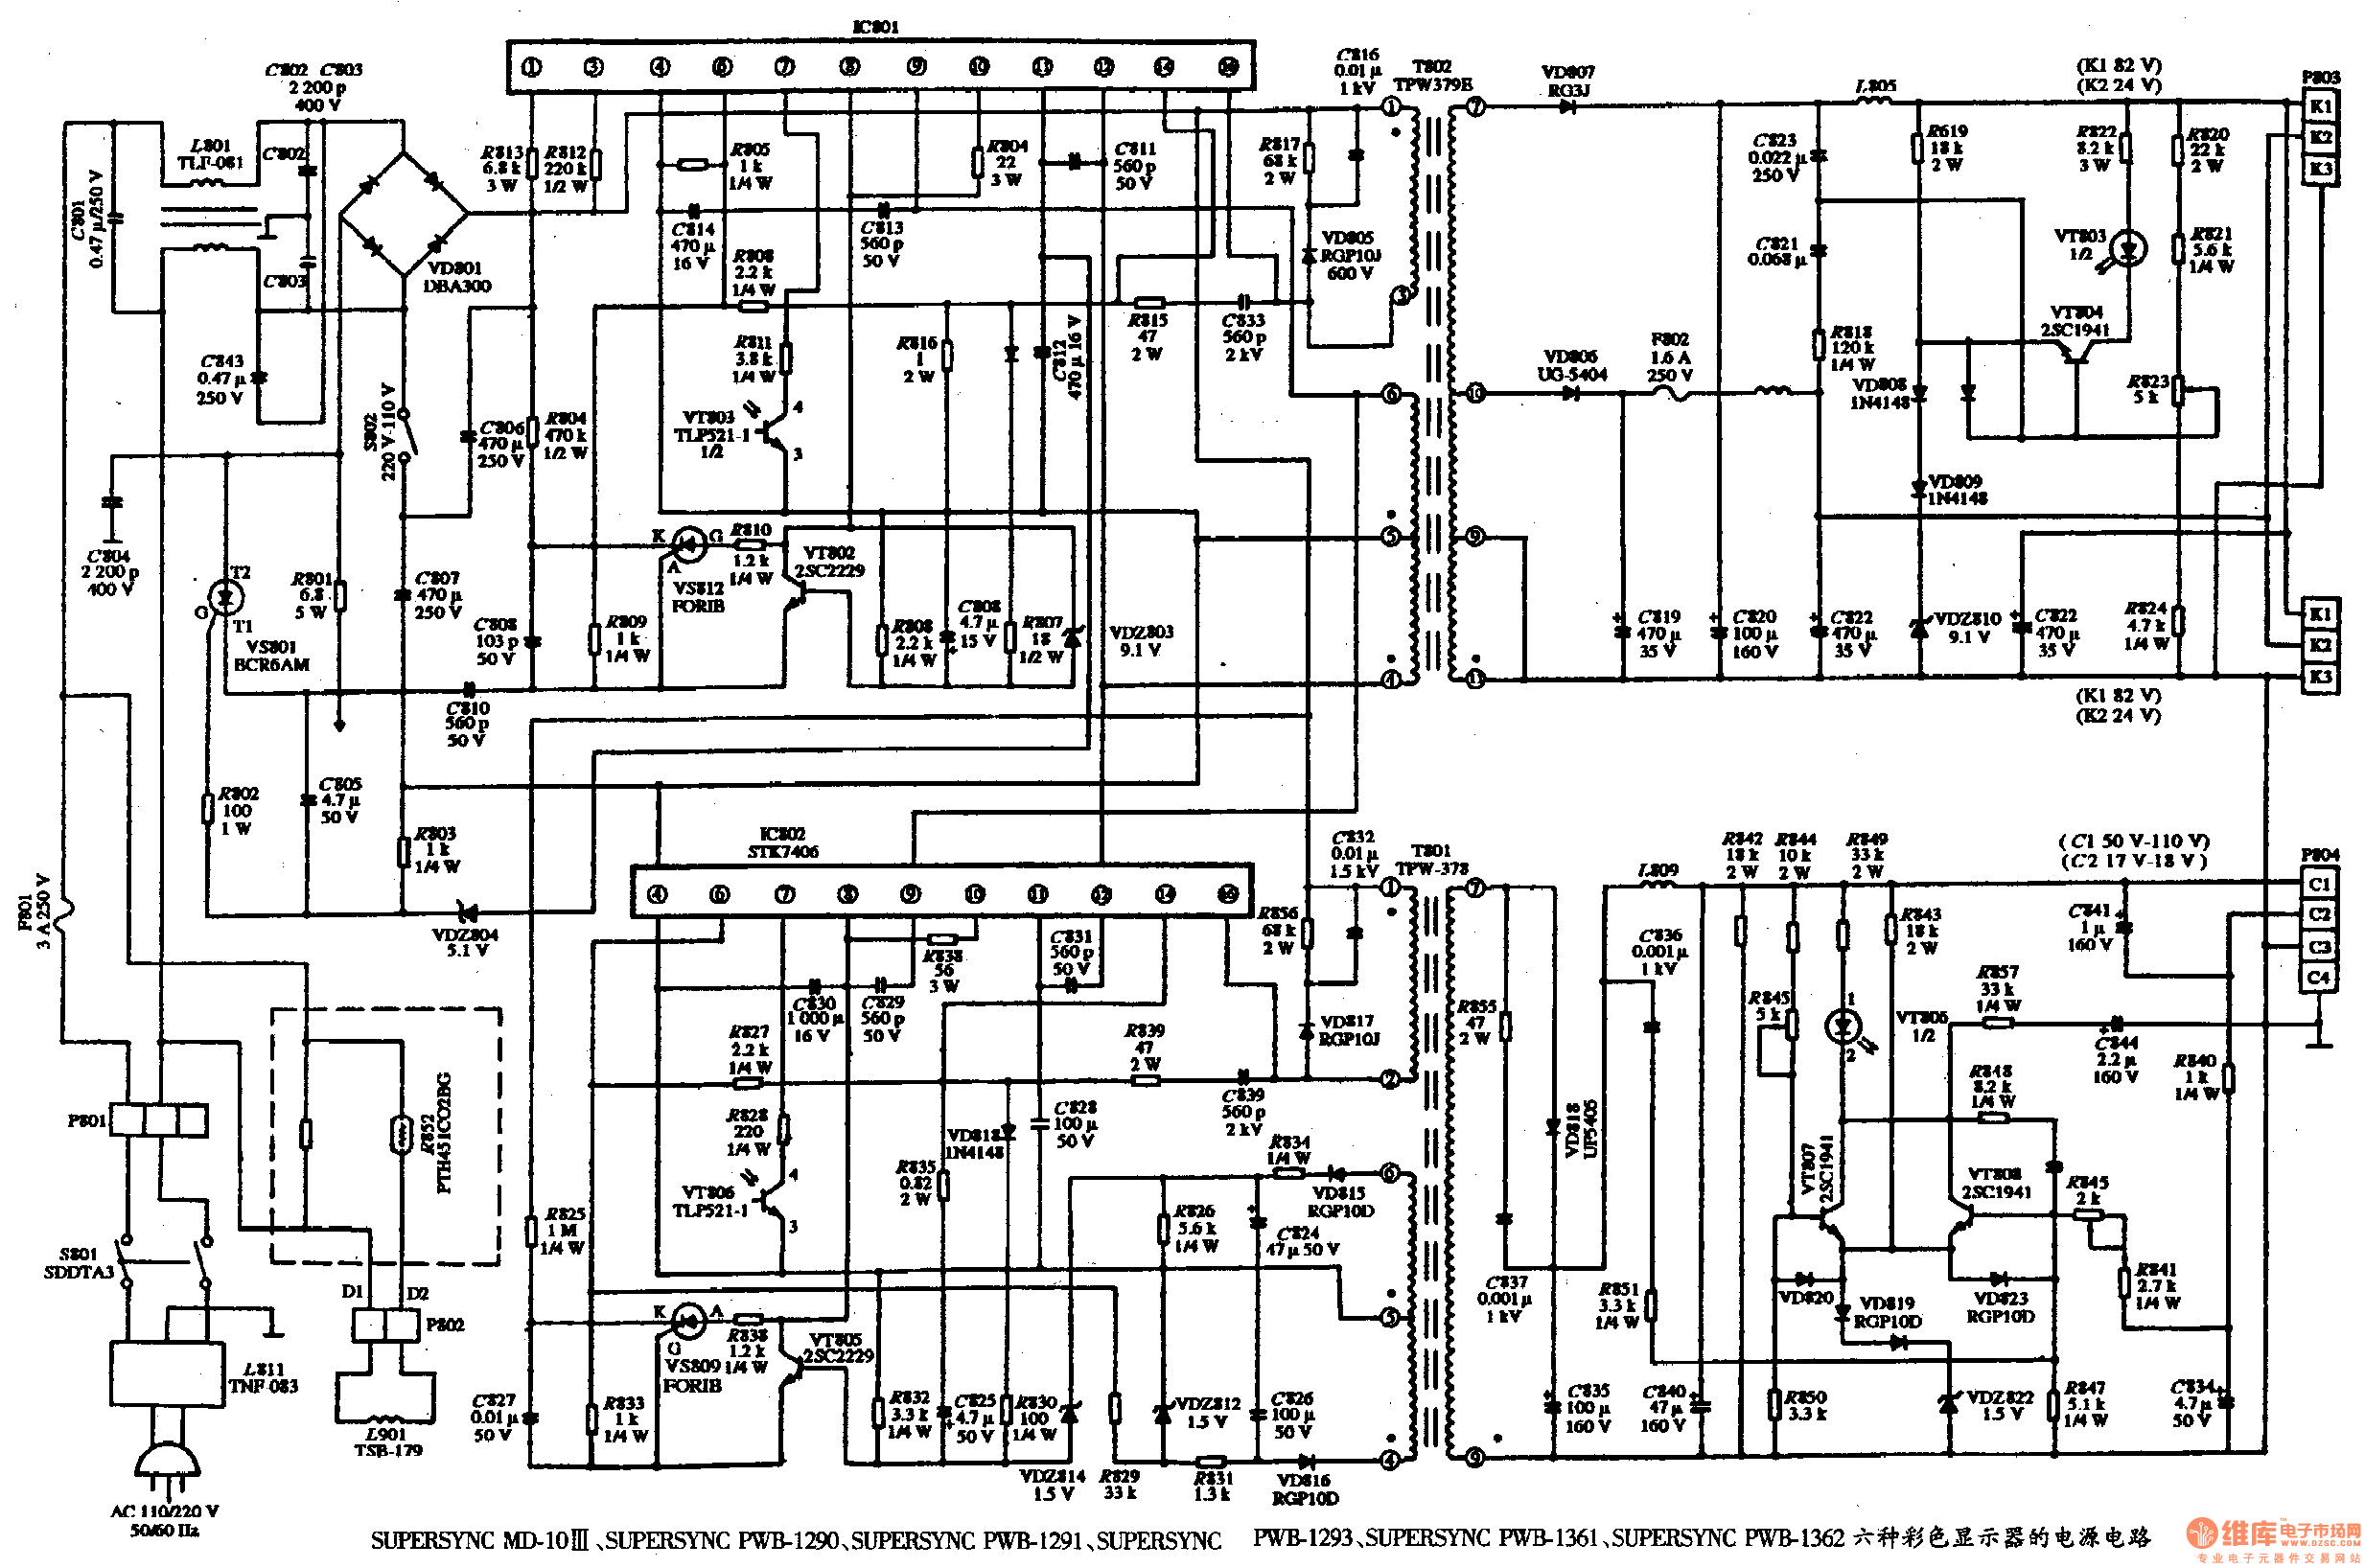 89、PWB-1362六种机型彩色显示器的电源电路图